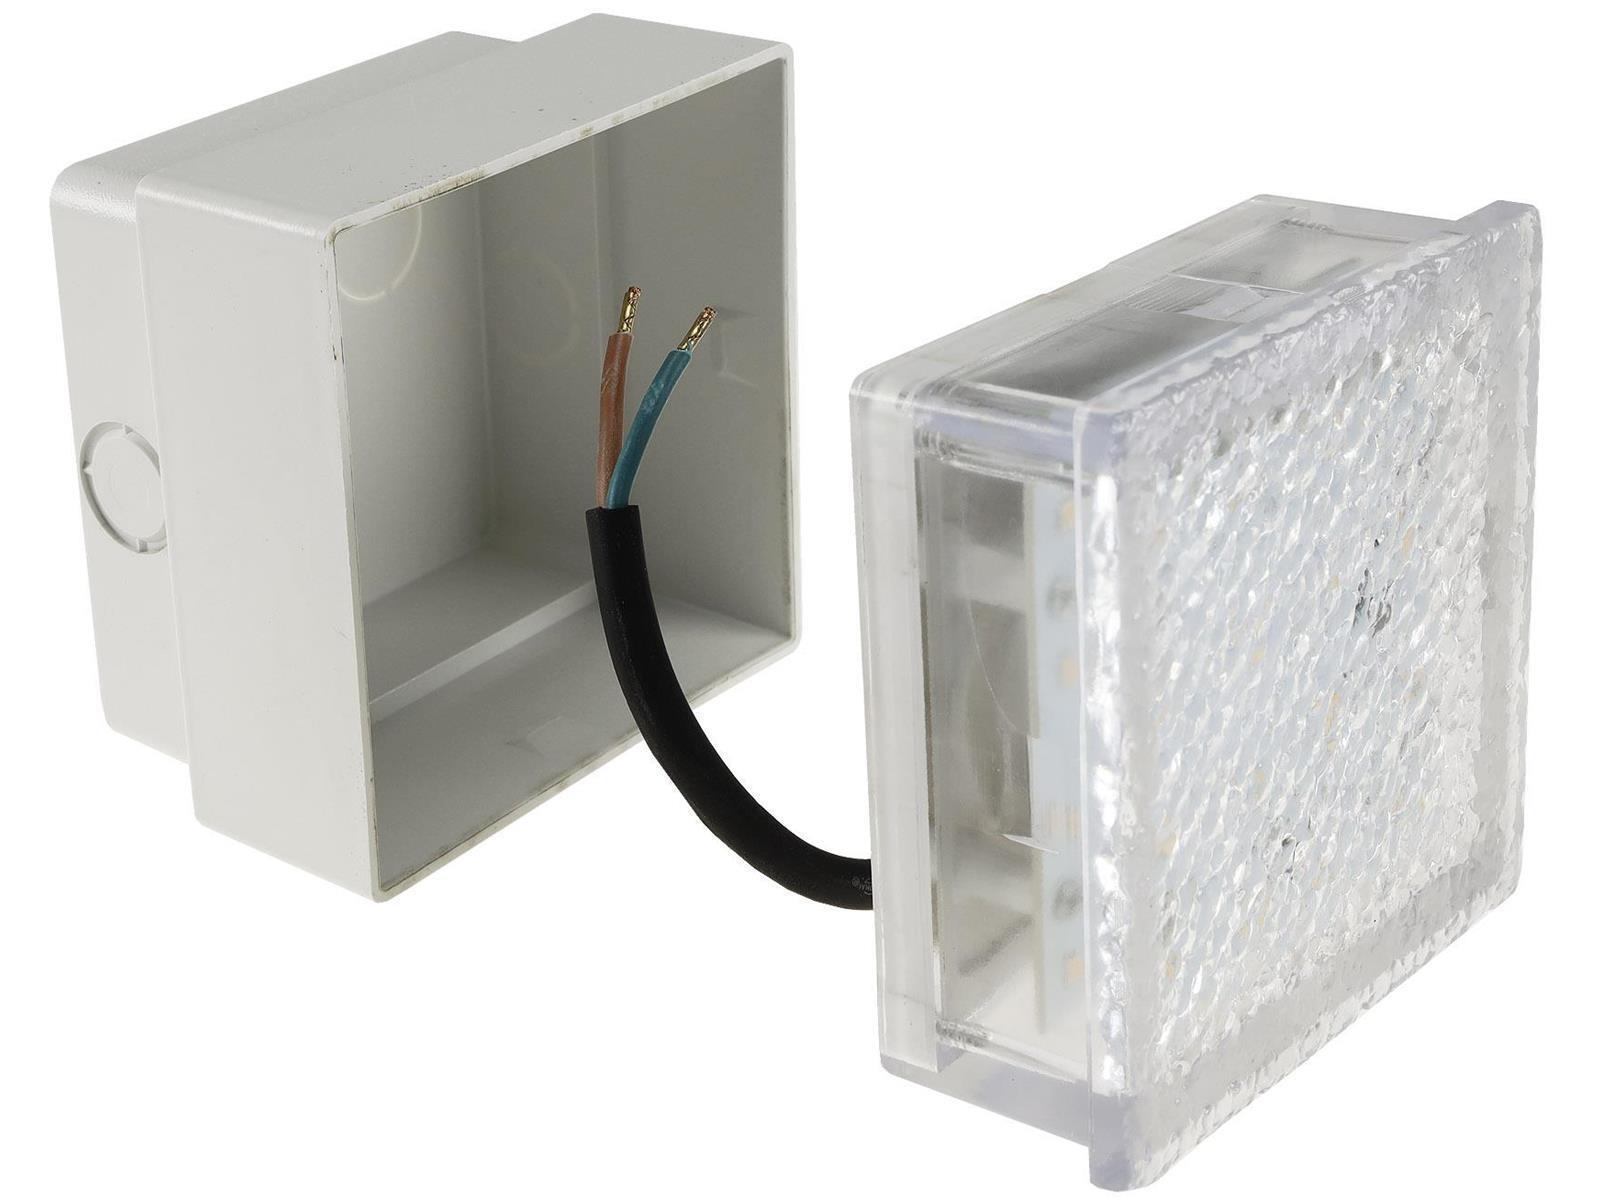 LED Pflasterstein "BRIKX 10" neutralweiß10x10x7cm, 92lm, IP67, 230V